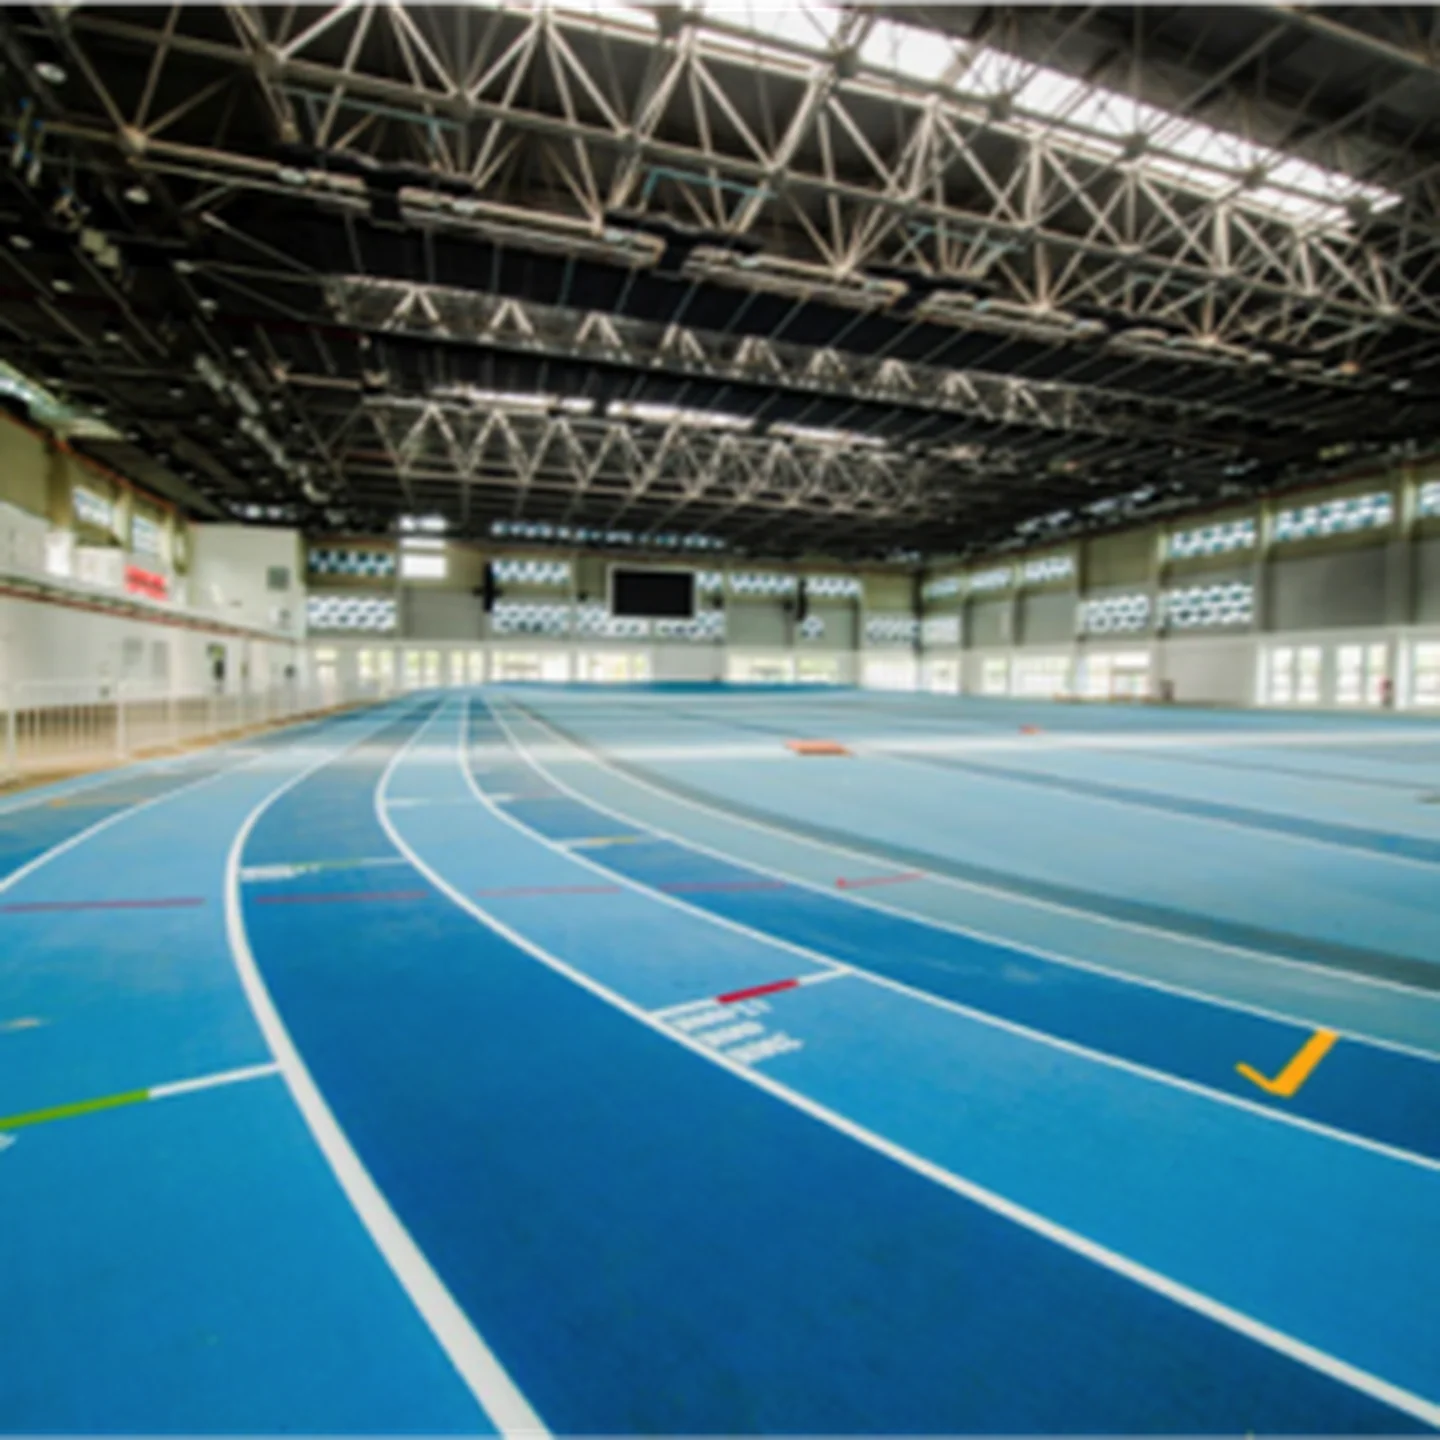 World Athletics postpones Nanjing 2023 Indoor World Championships